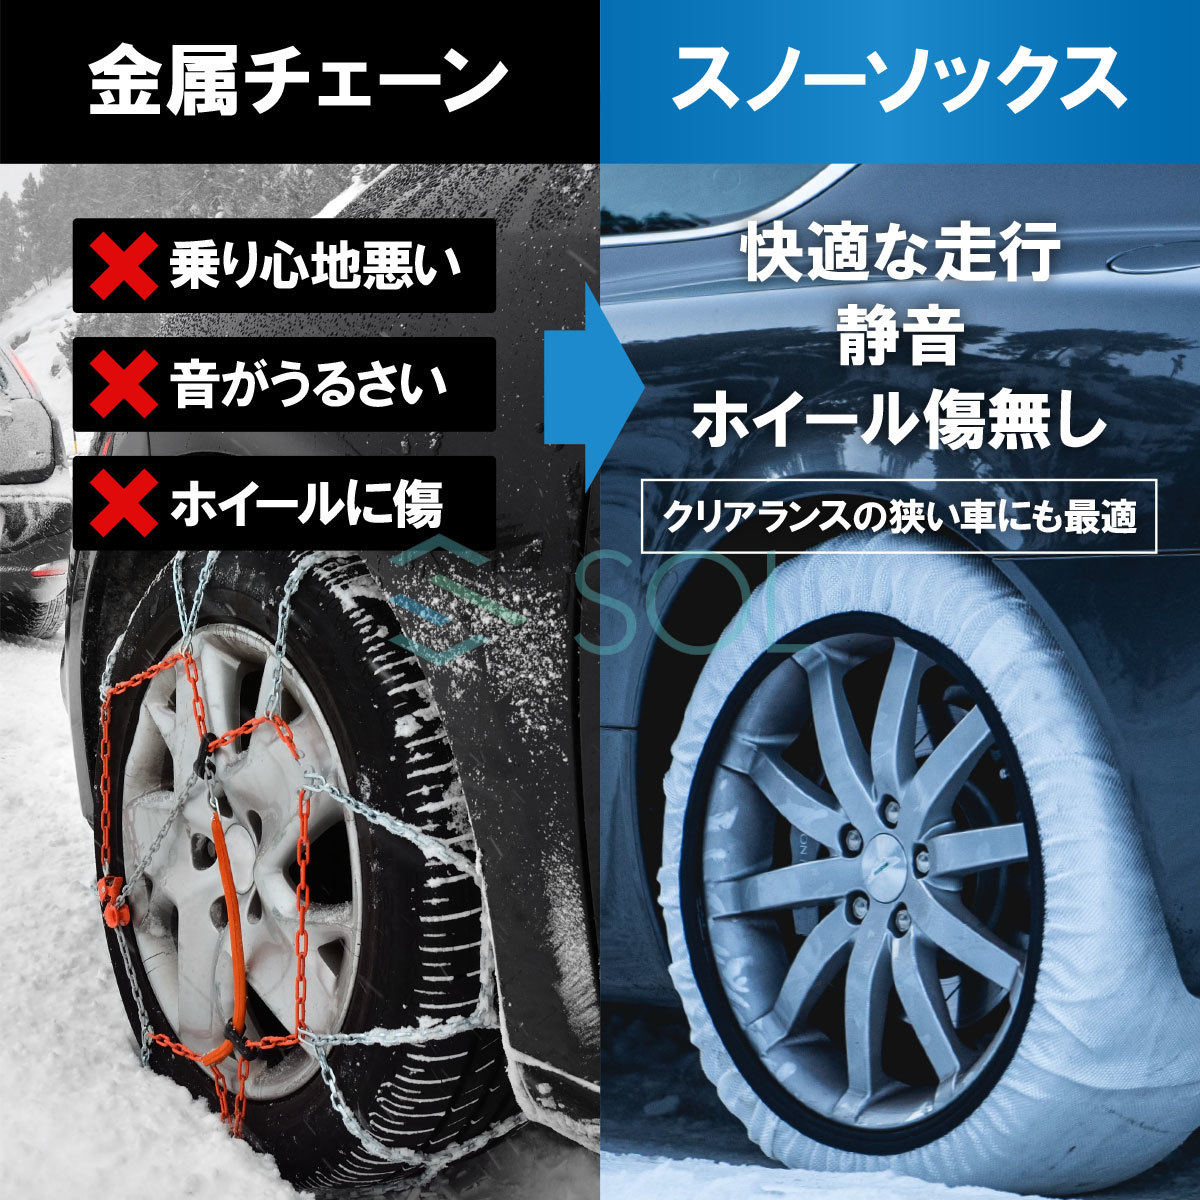 ISSE 日本正規代理店 特許取得 イッセ スノーソックス 滑らない タイヤチェーン サイズ70 ランドクルーザー オデッセイ エクストレイル_画像7